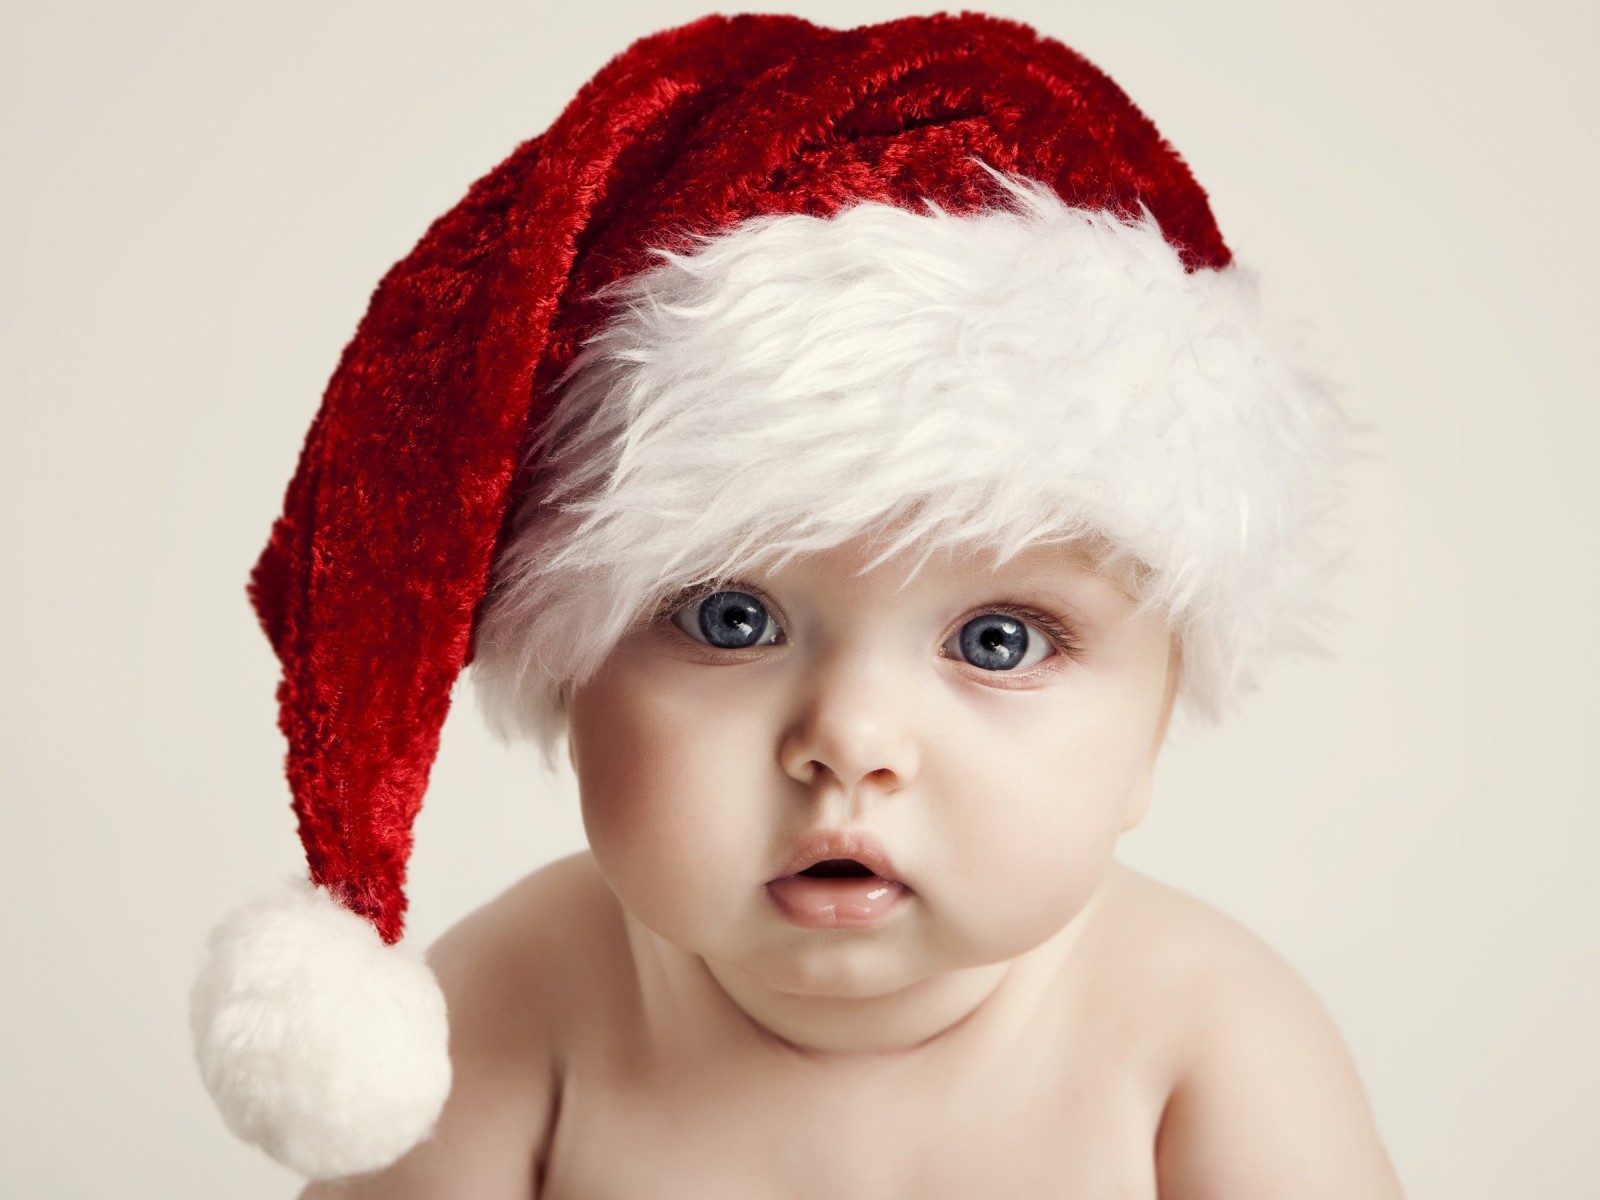 Santa Claus Baby Boy Wallpaper for Desktop 1600x1200